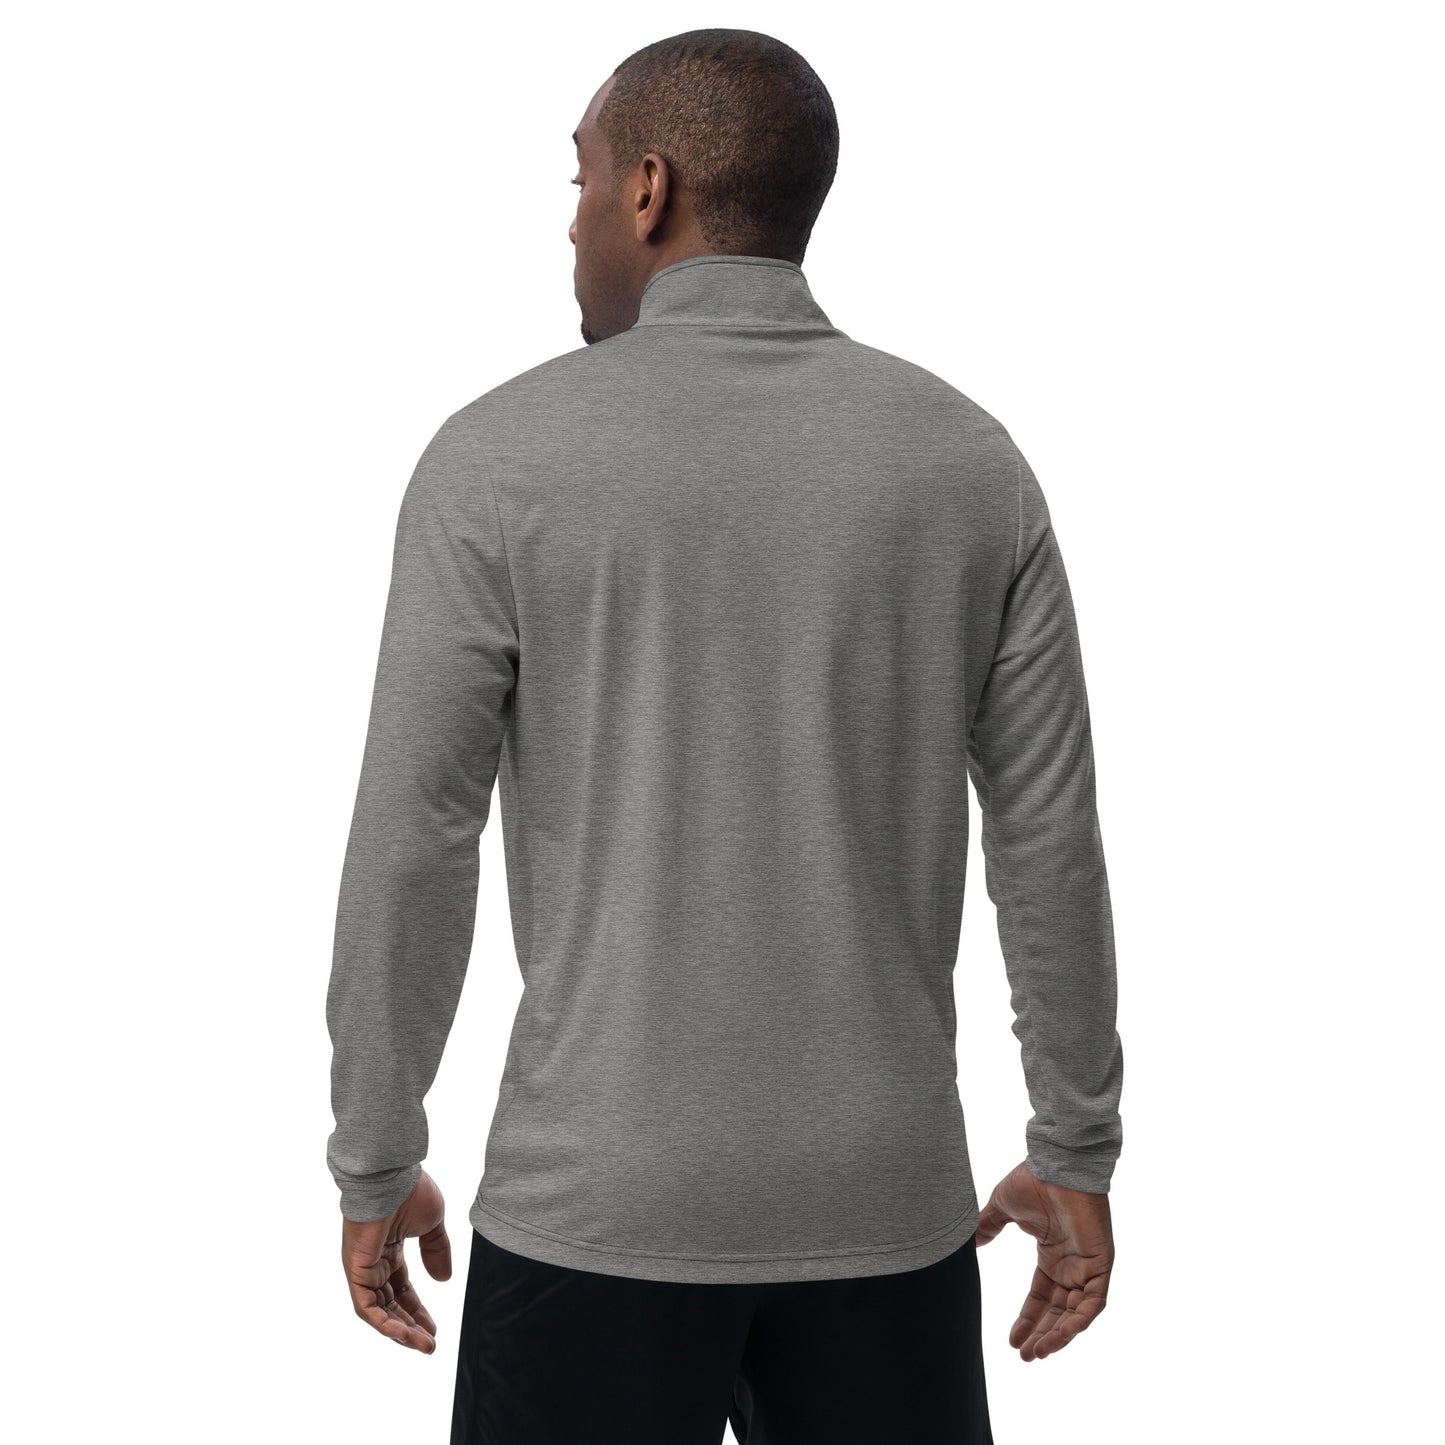 ISAN/Adidas Quarter Zip Pullover